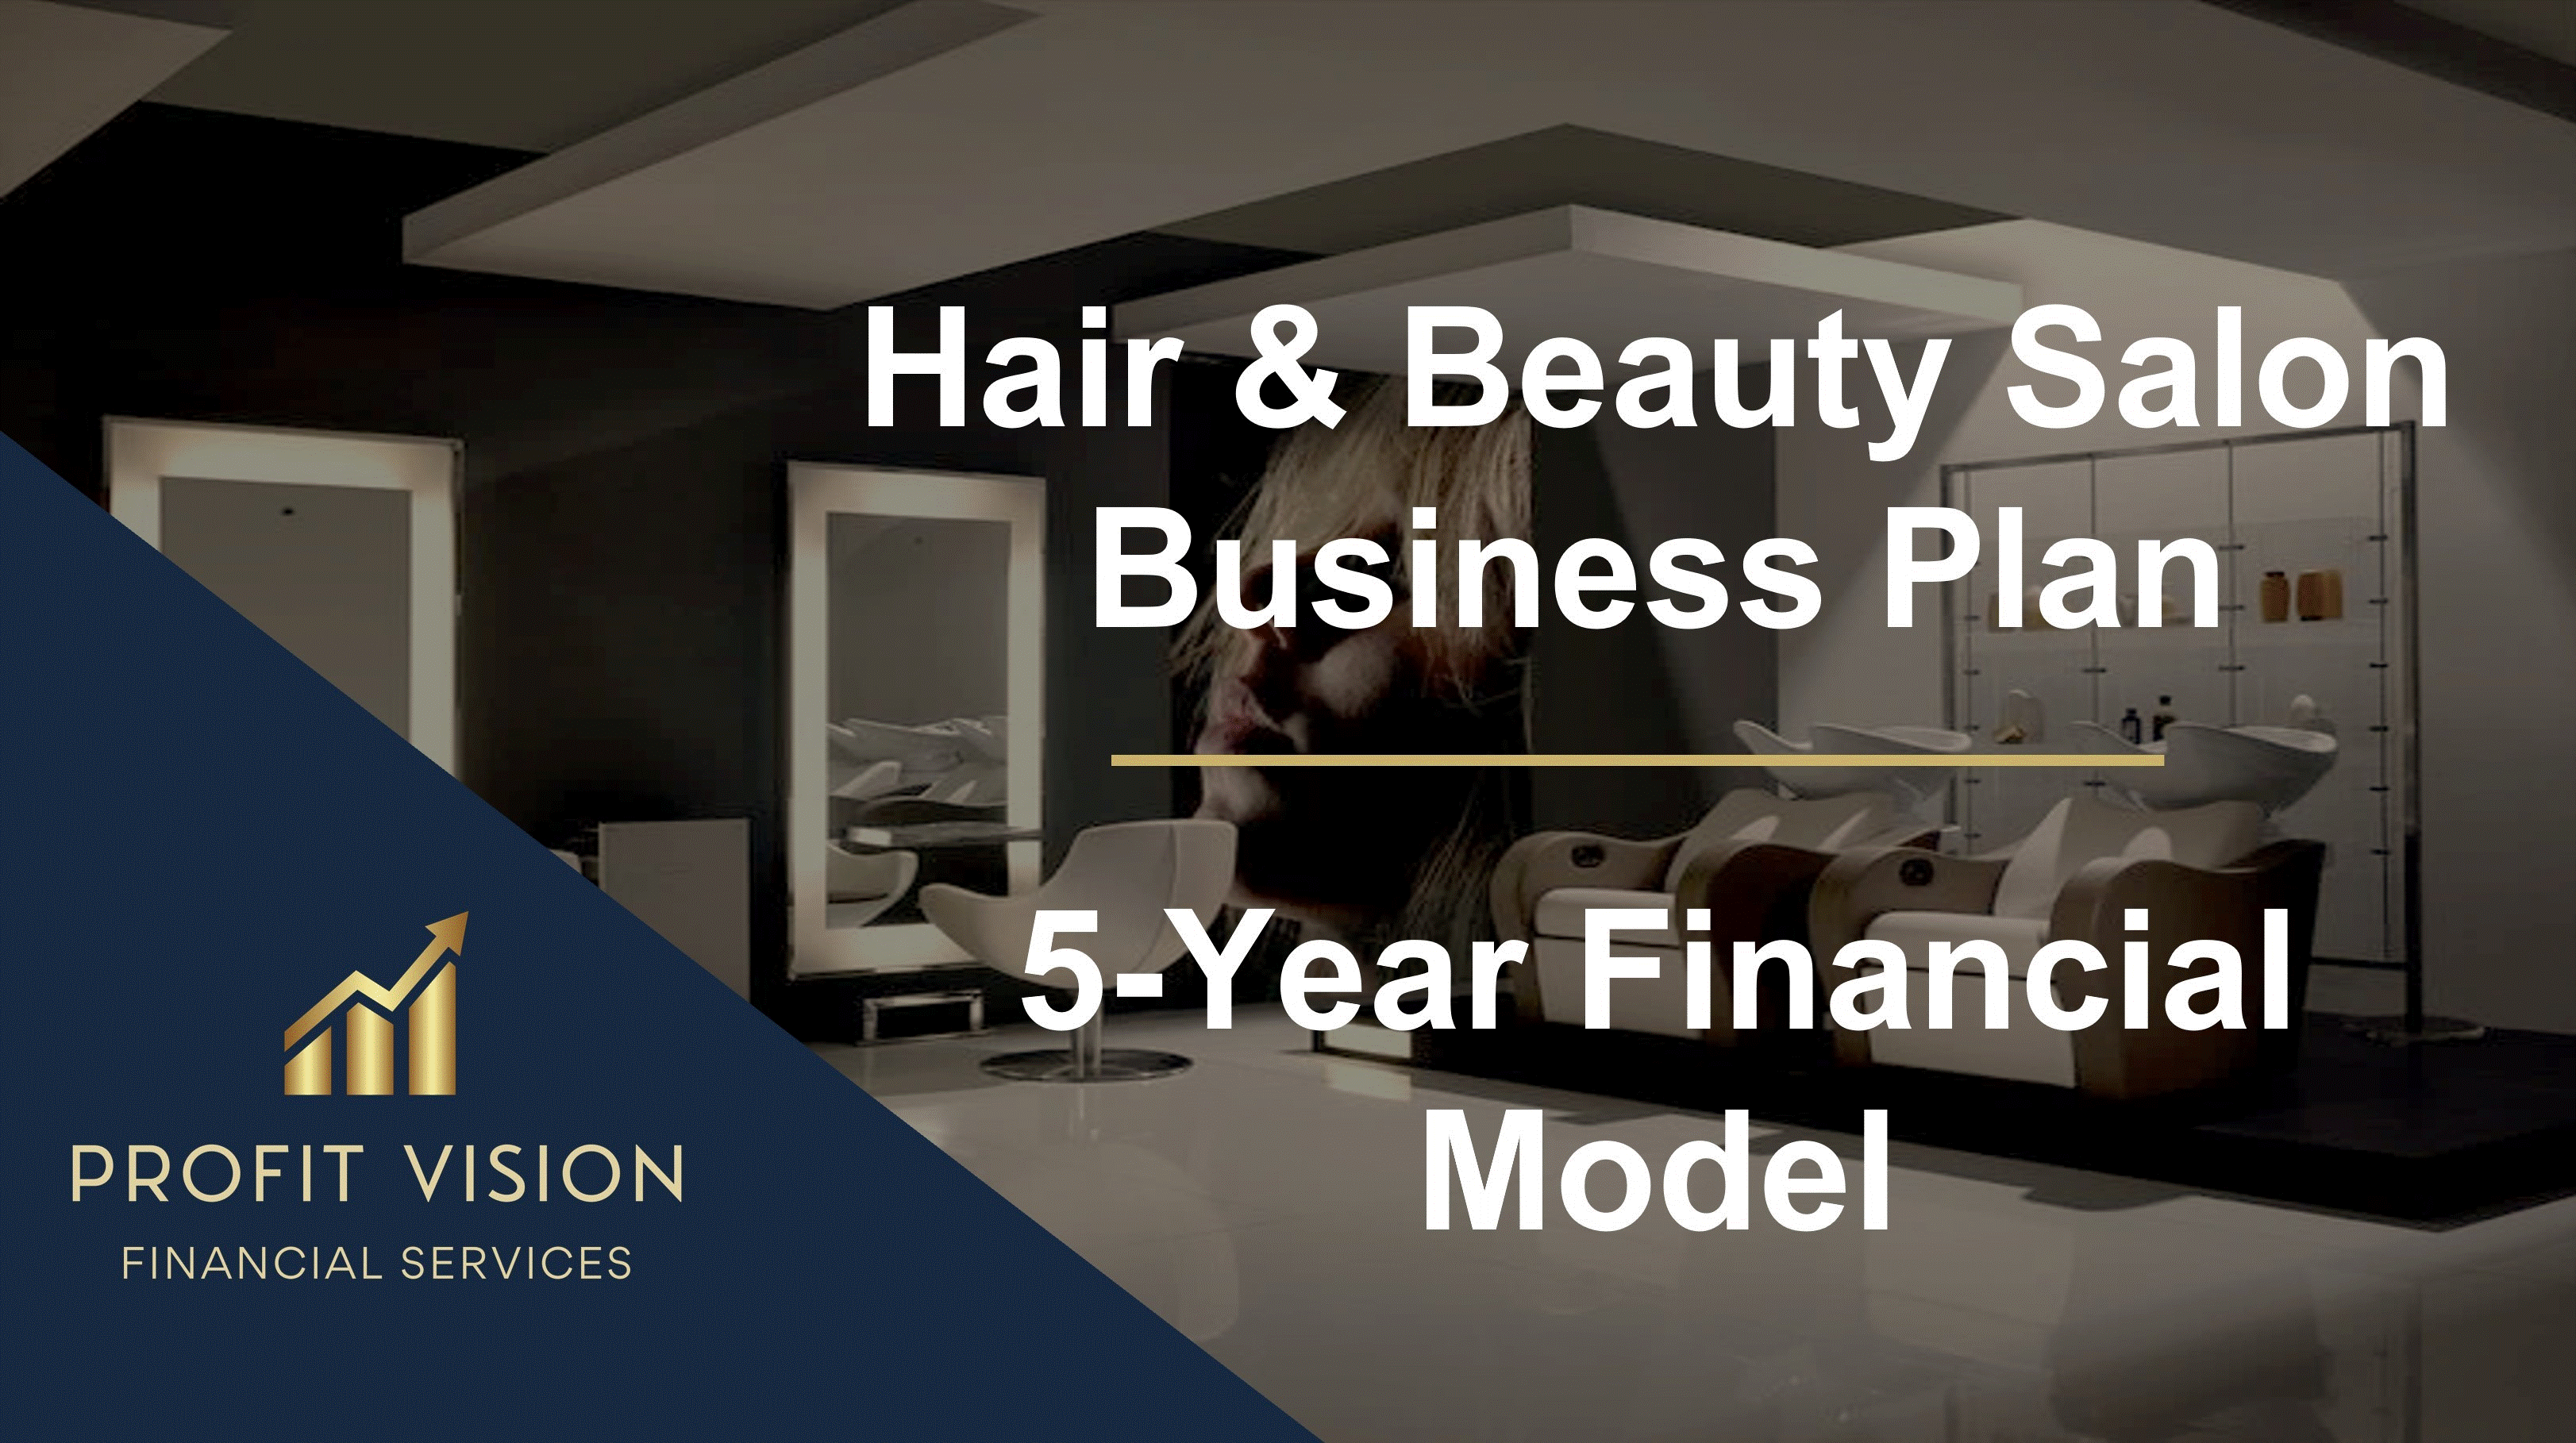 Hair & Beauty Salon Business Plan - 5-Year Financial Projection